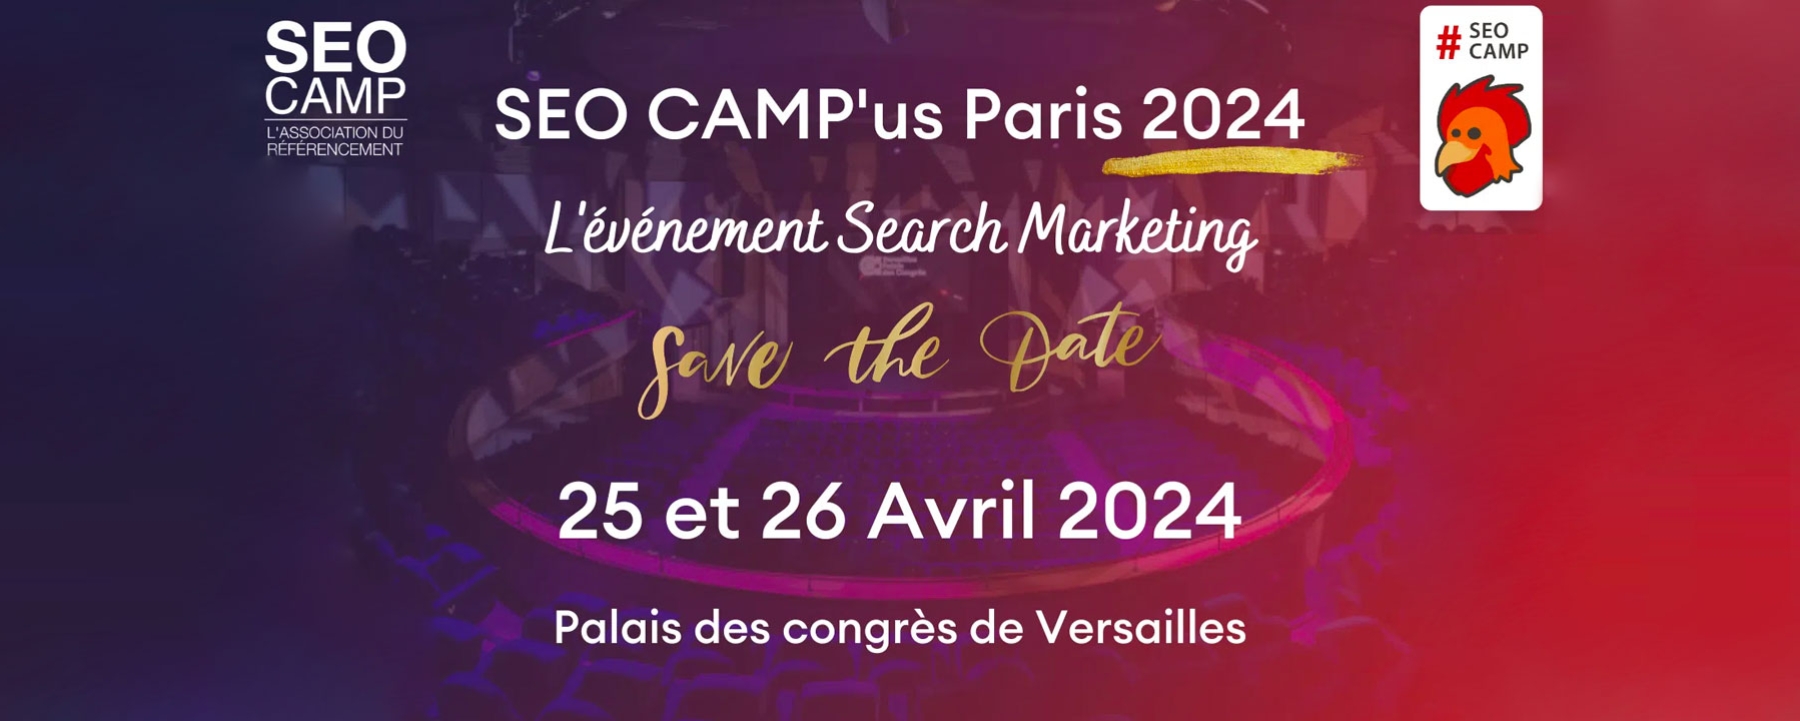 SEO Camp’us Paris